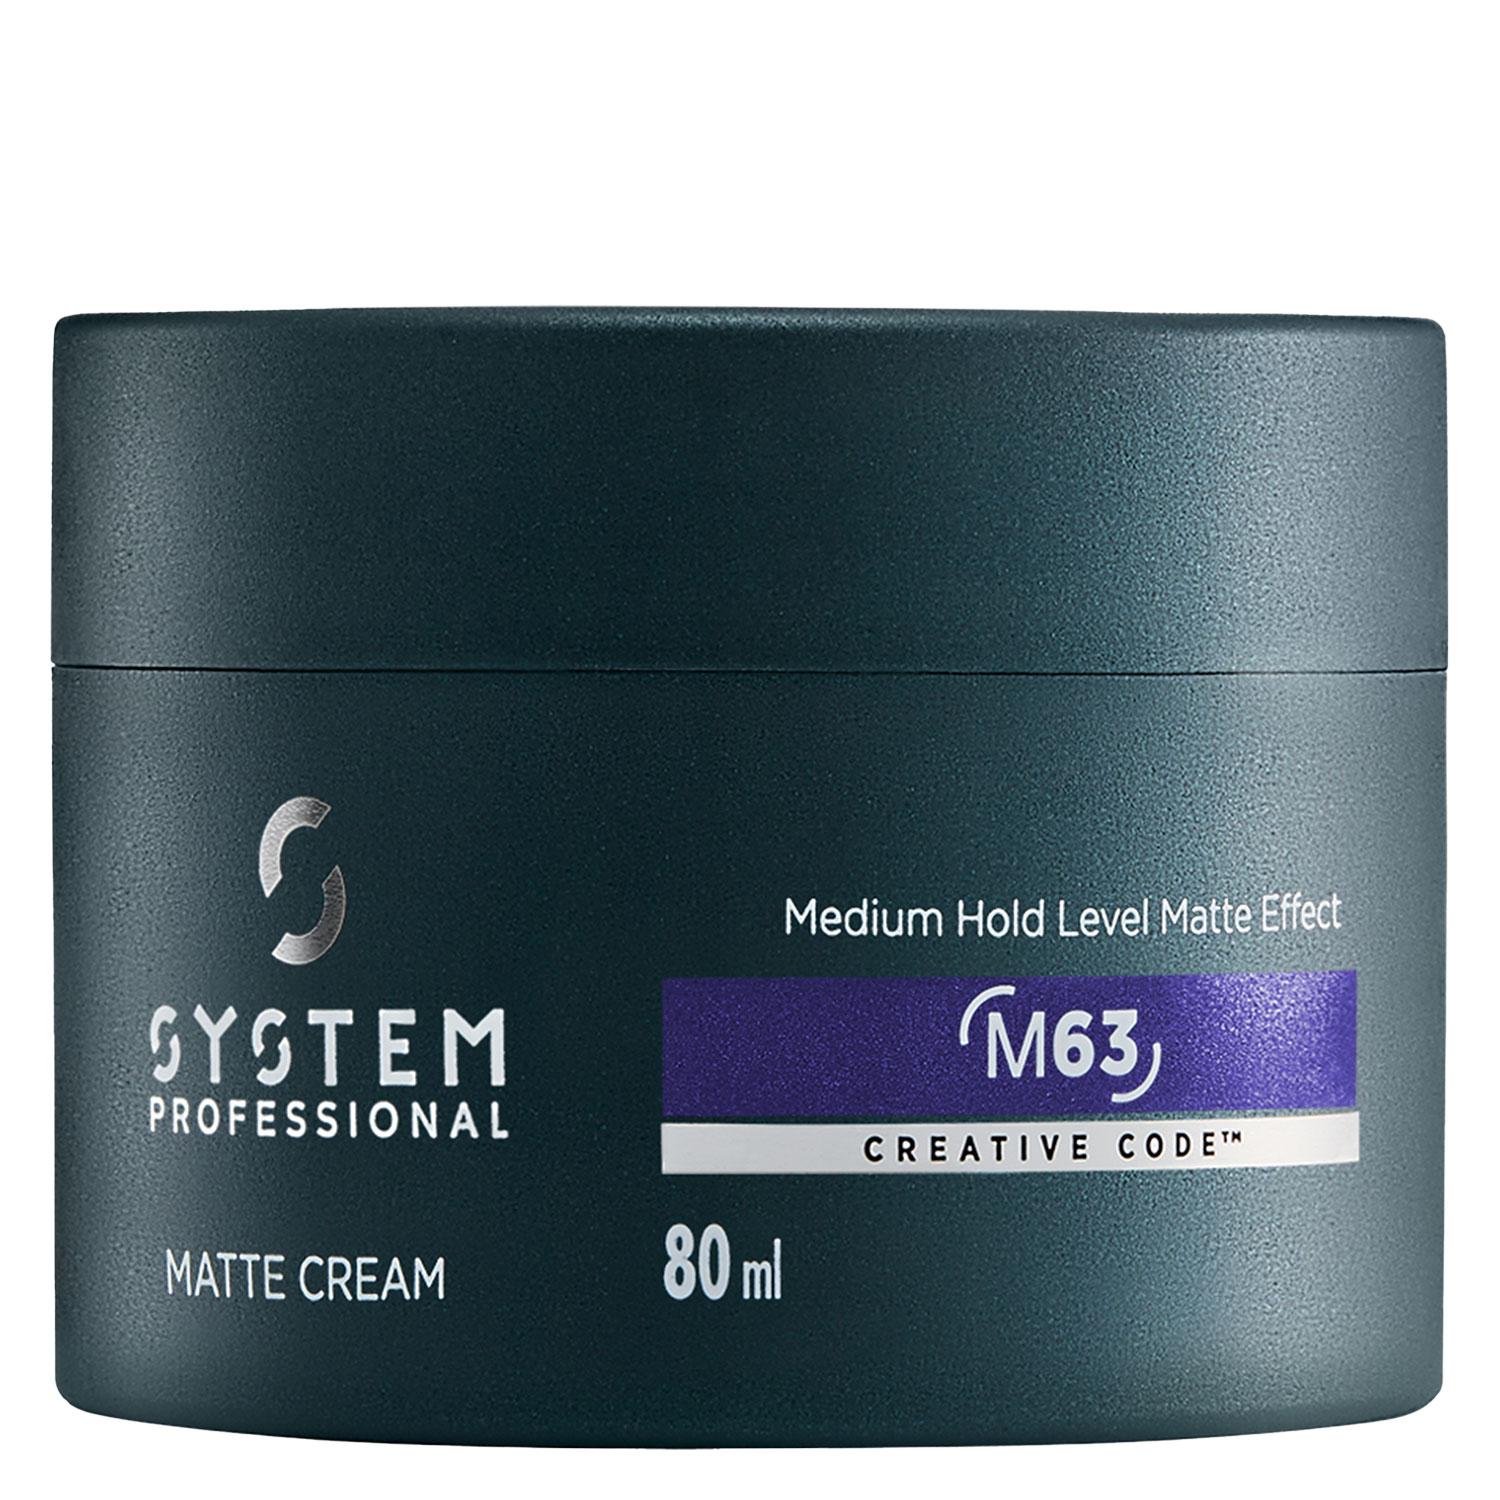 System Professional Man - Matte Cream